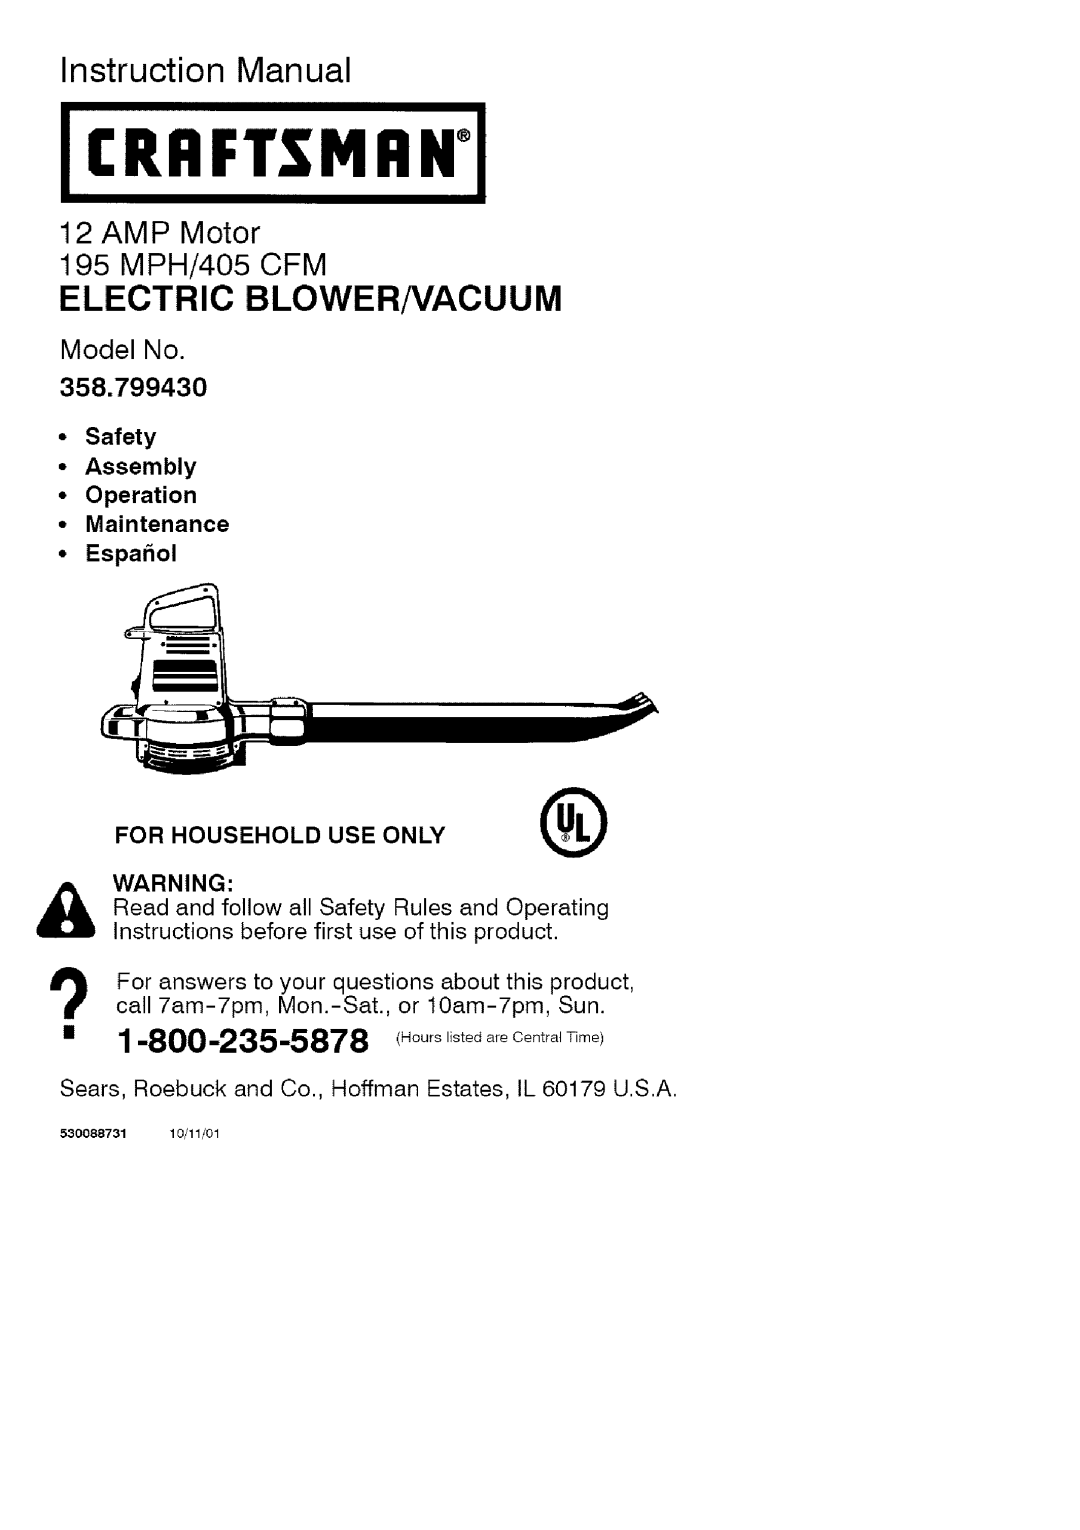 Craftsman 358.799430 manual ICRRFTgMRNI, Electric Blowernacuum, Safety Assembly Operation Maintenance 